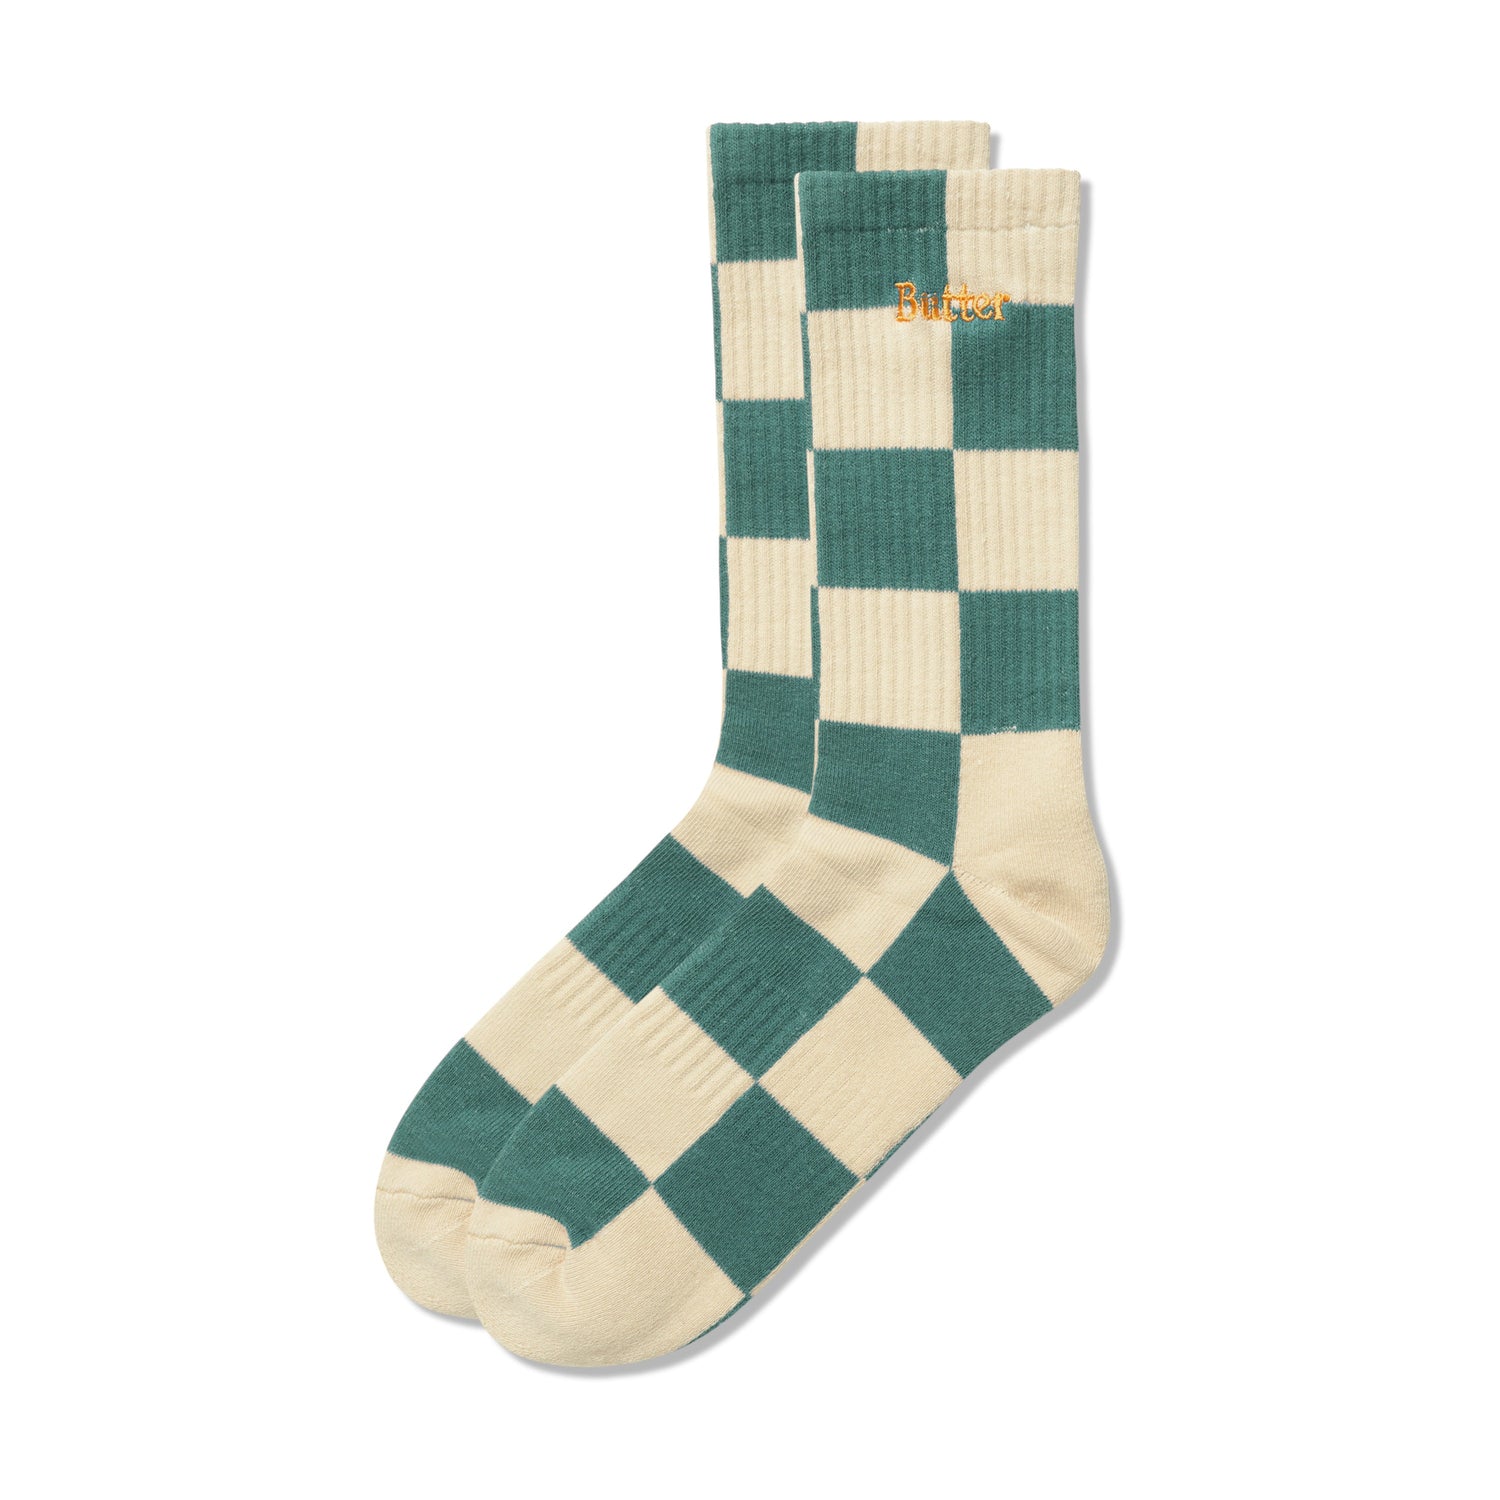 Checkered Socks, Teal / Tan